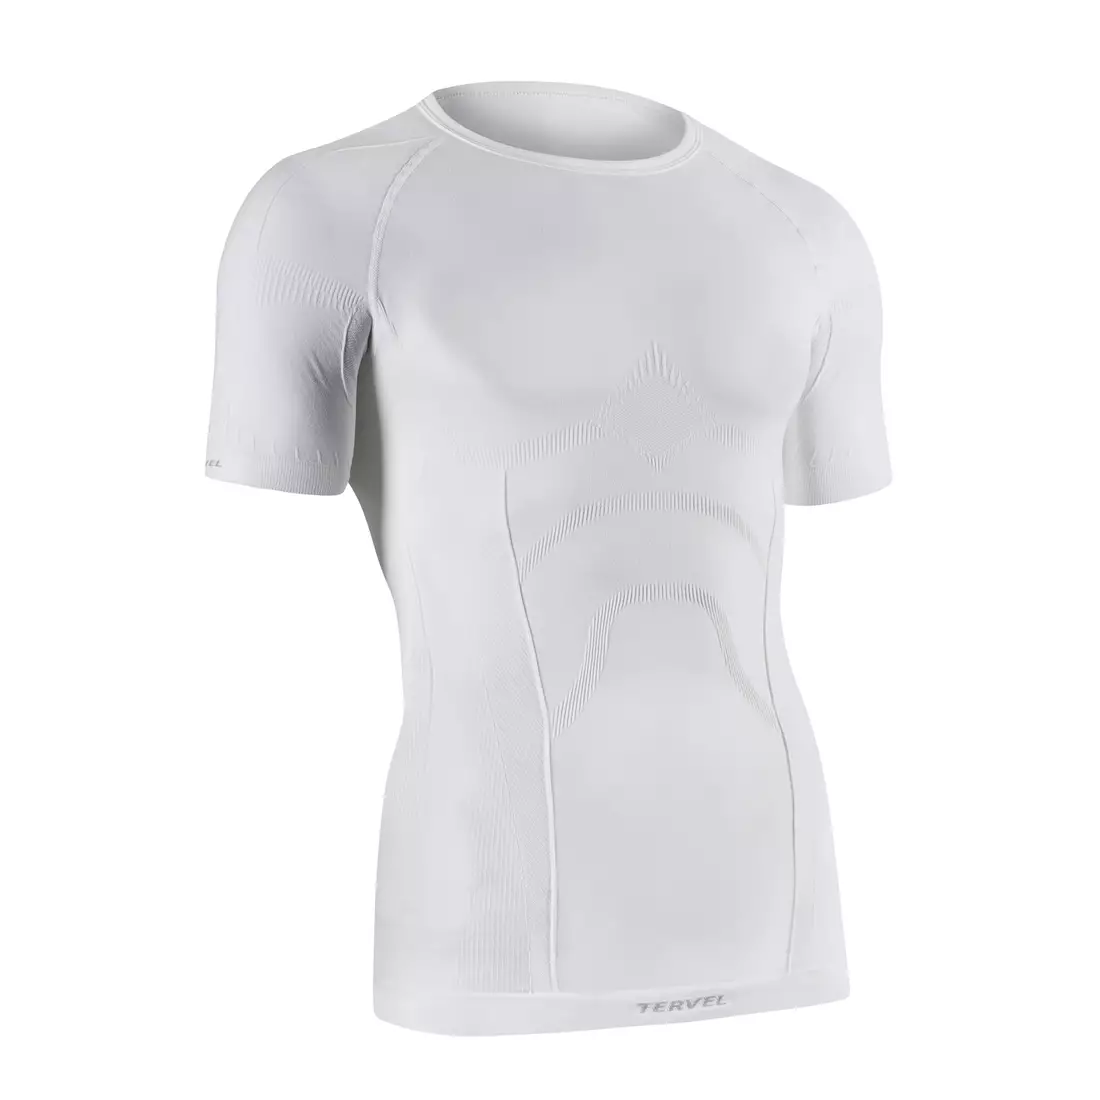 TERVEL COMFORTLINE 1102 - men's thermal T-shirt, short sleeve, color: White